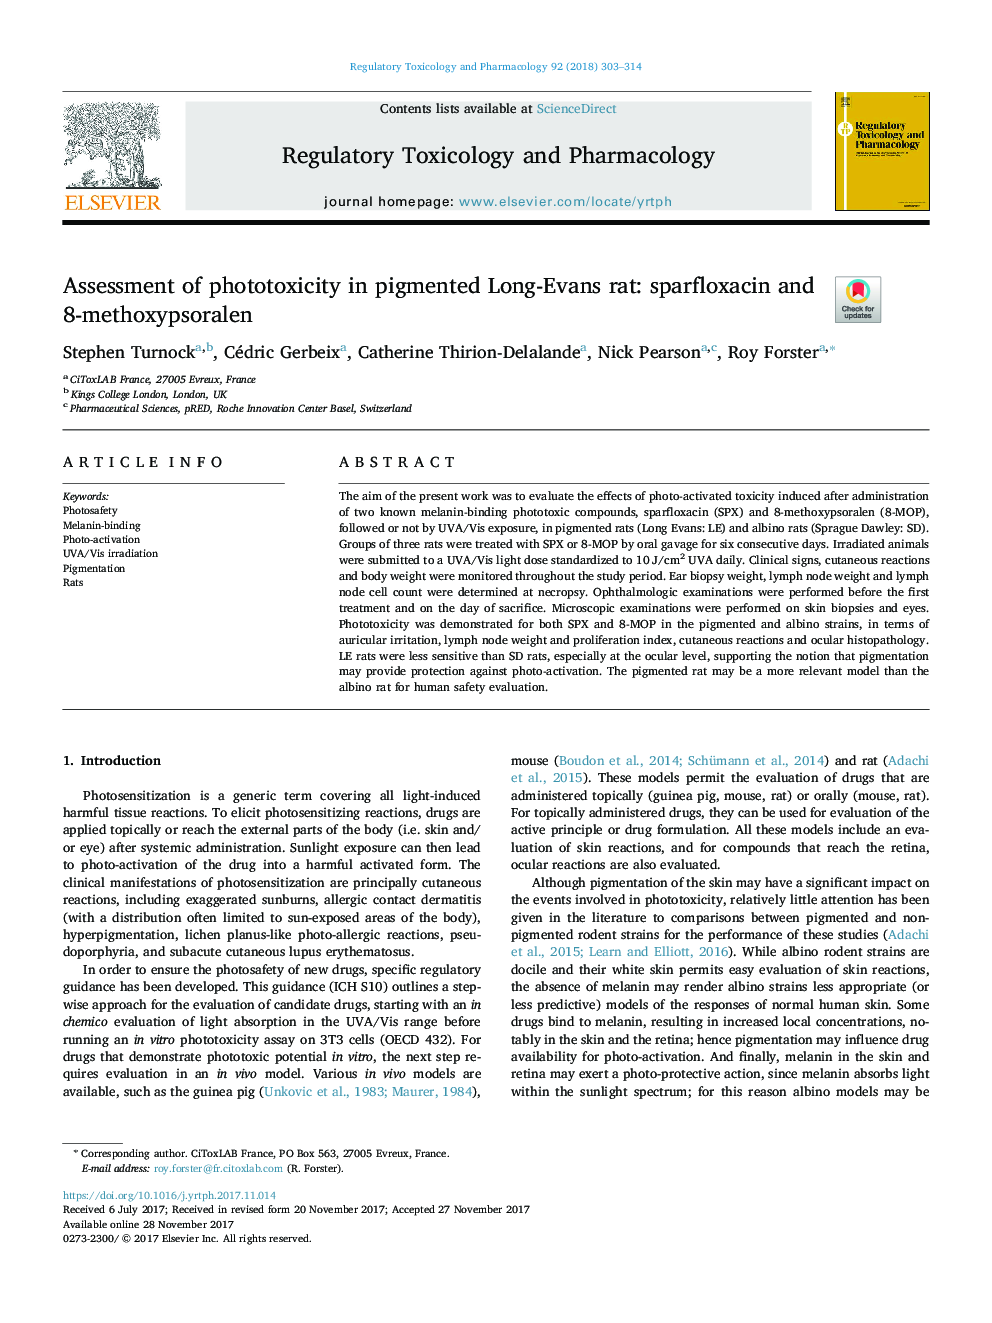 Assessment of phototoxicity in pigmented Long-Evans rat: sparfloxacin and 8-methoxypsoralen